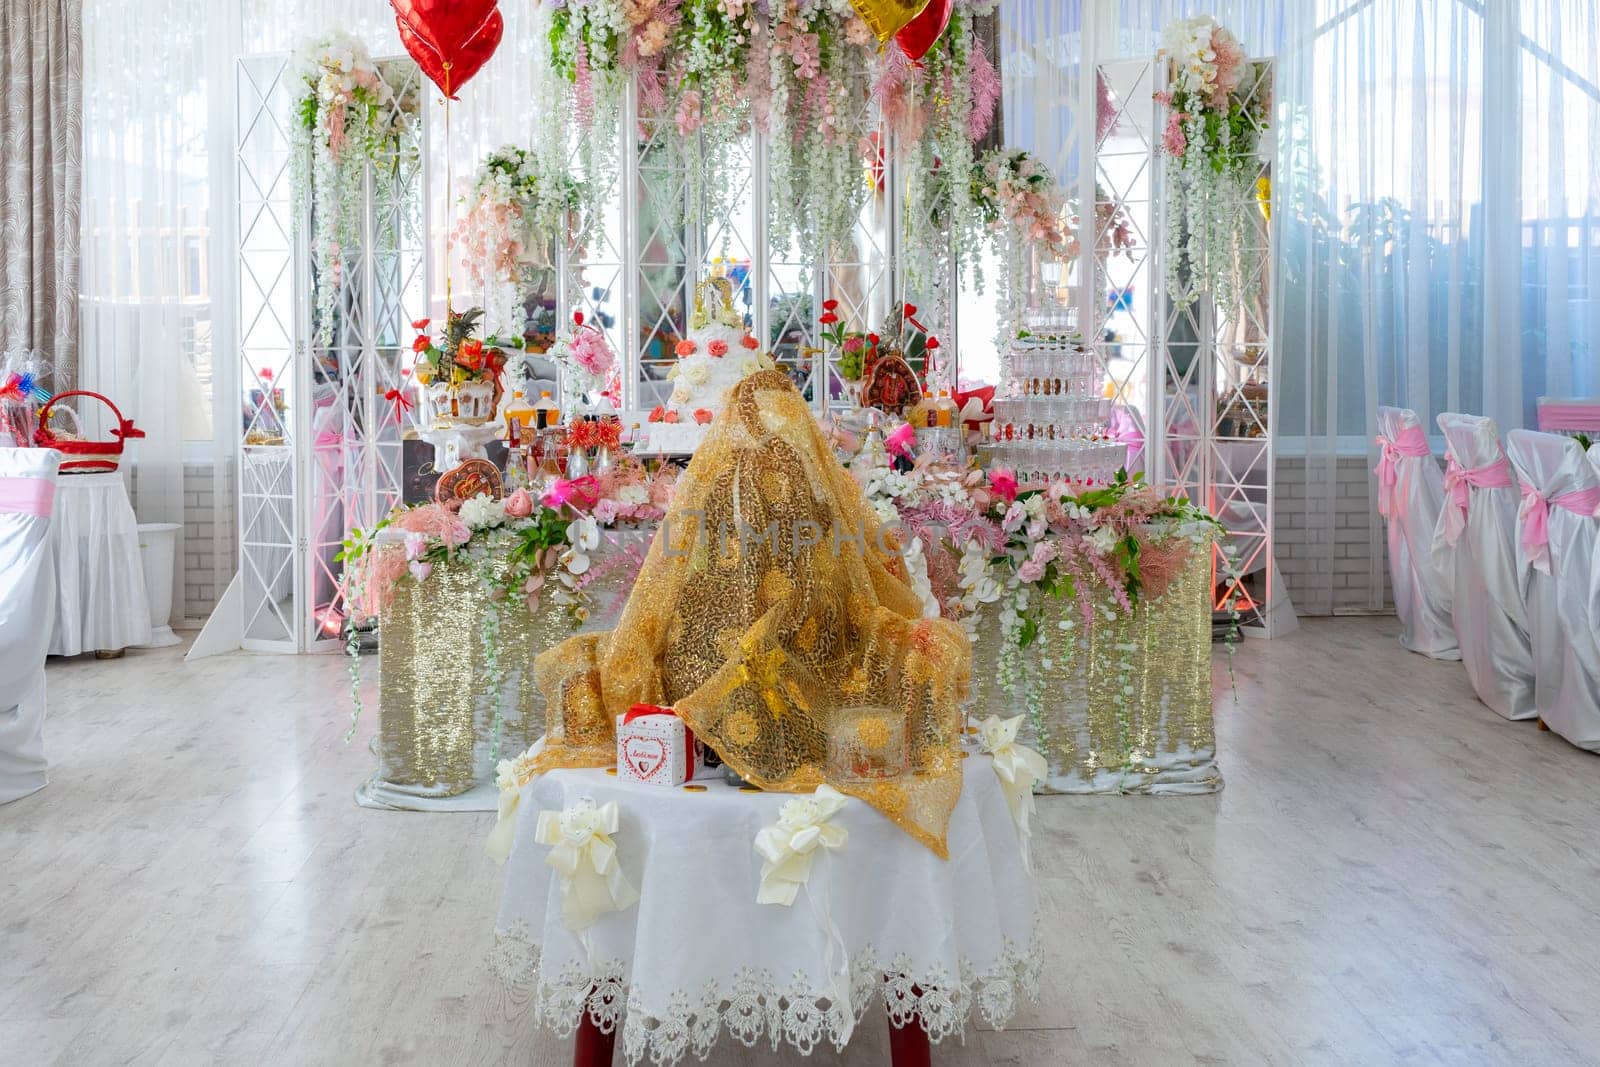 Hall decoration at a gypsy wedding by Serhii_Voroshchuk